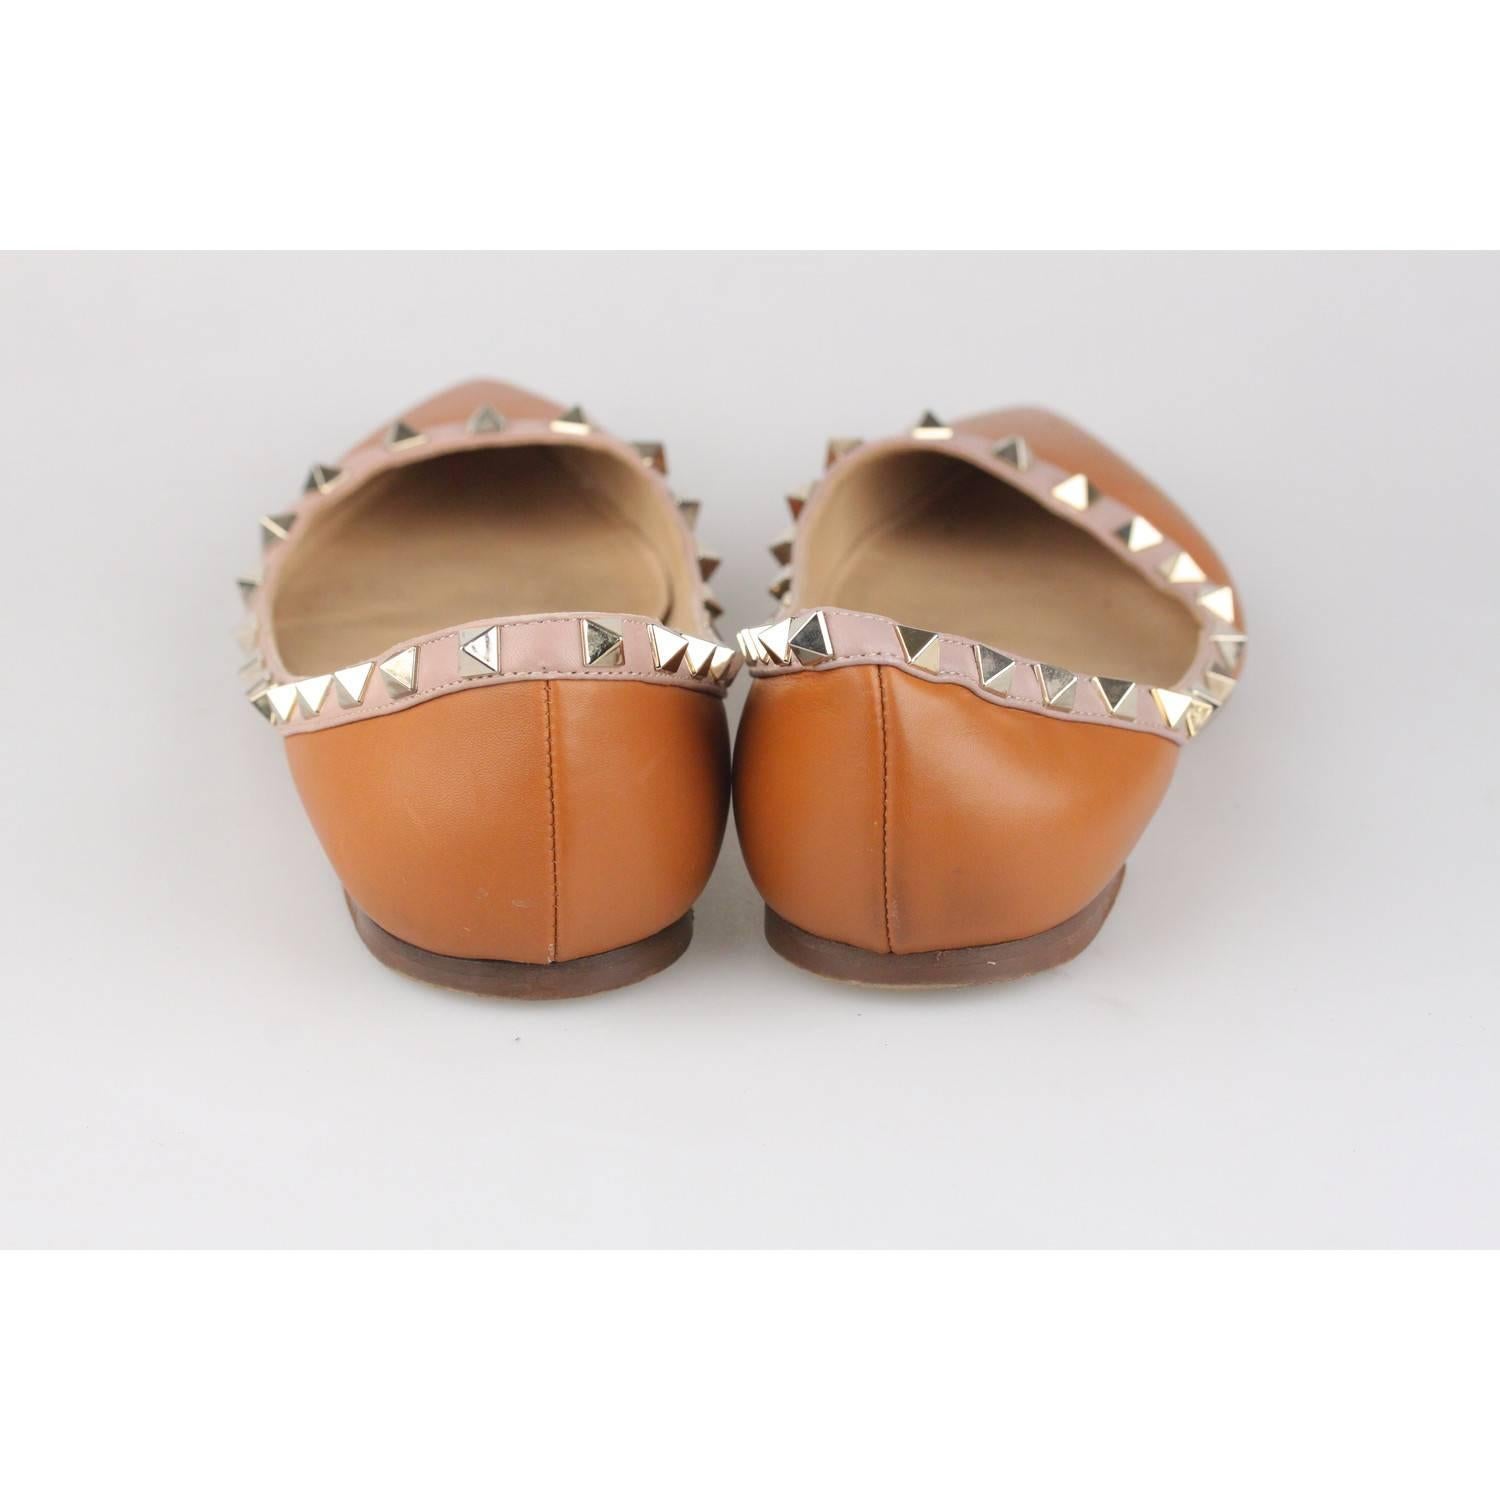 VALENTINO Beige Leather Rockstud Ballerina Shoes Size 39 2